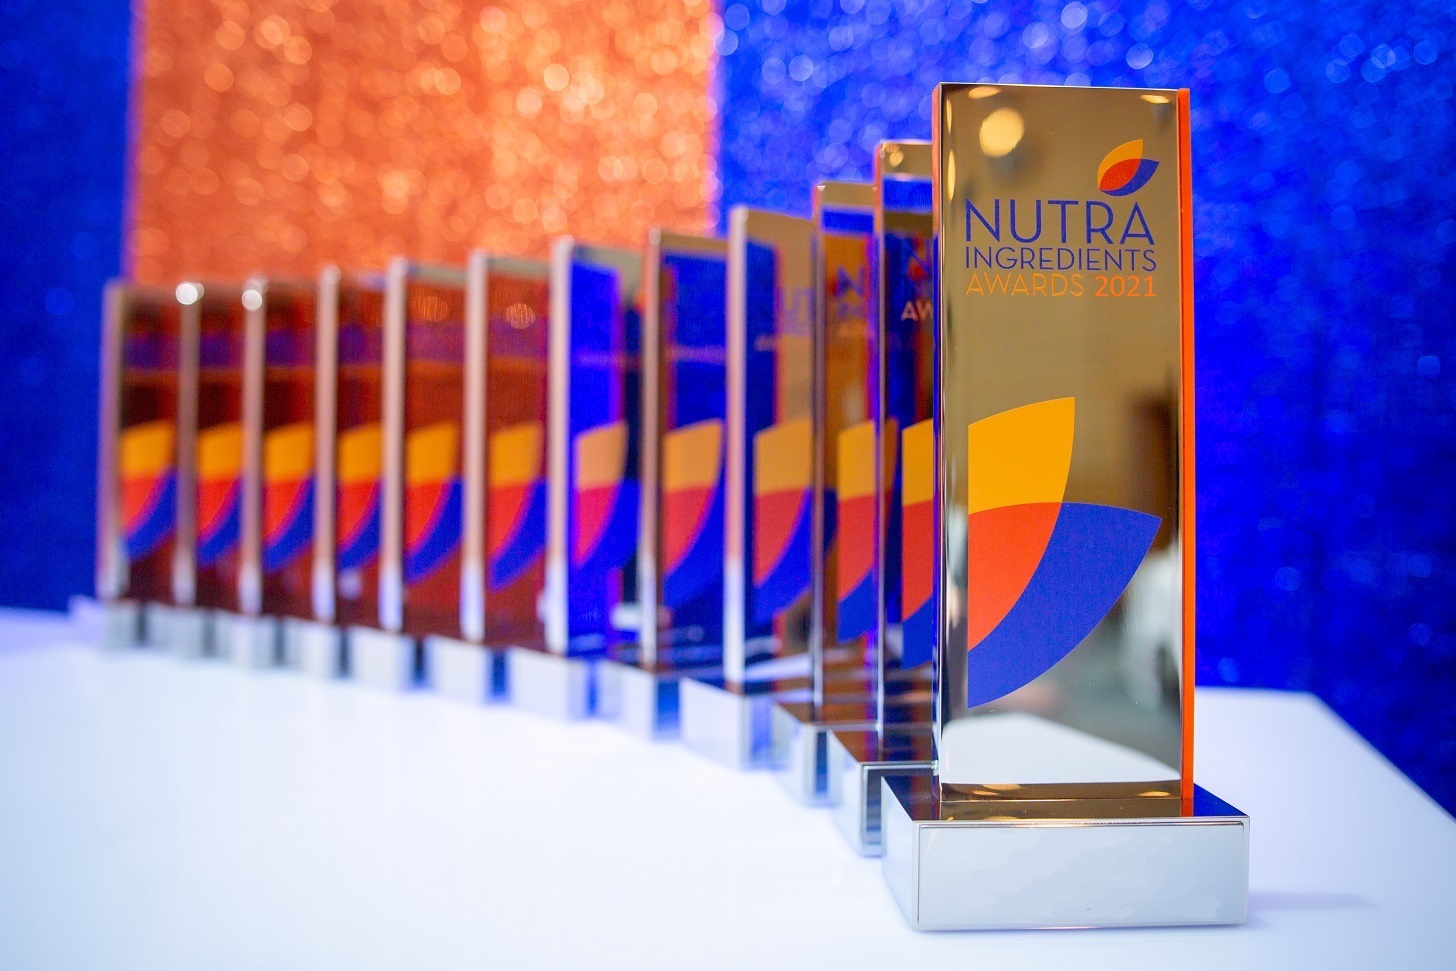 NutraIngredients Awards Finalists revealed